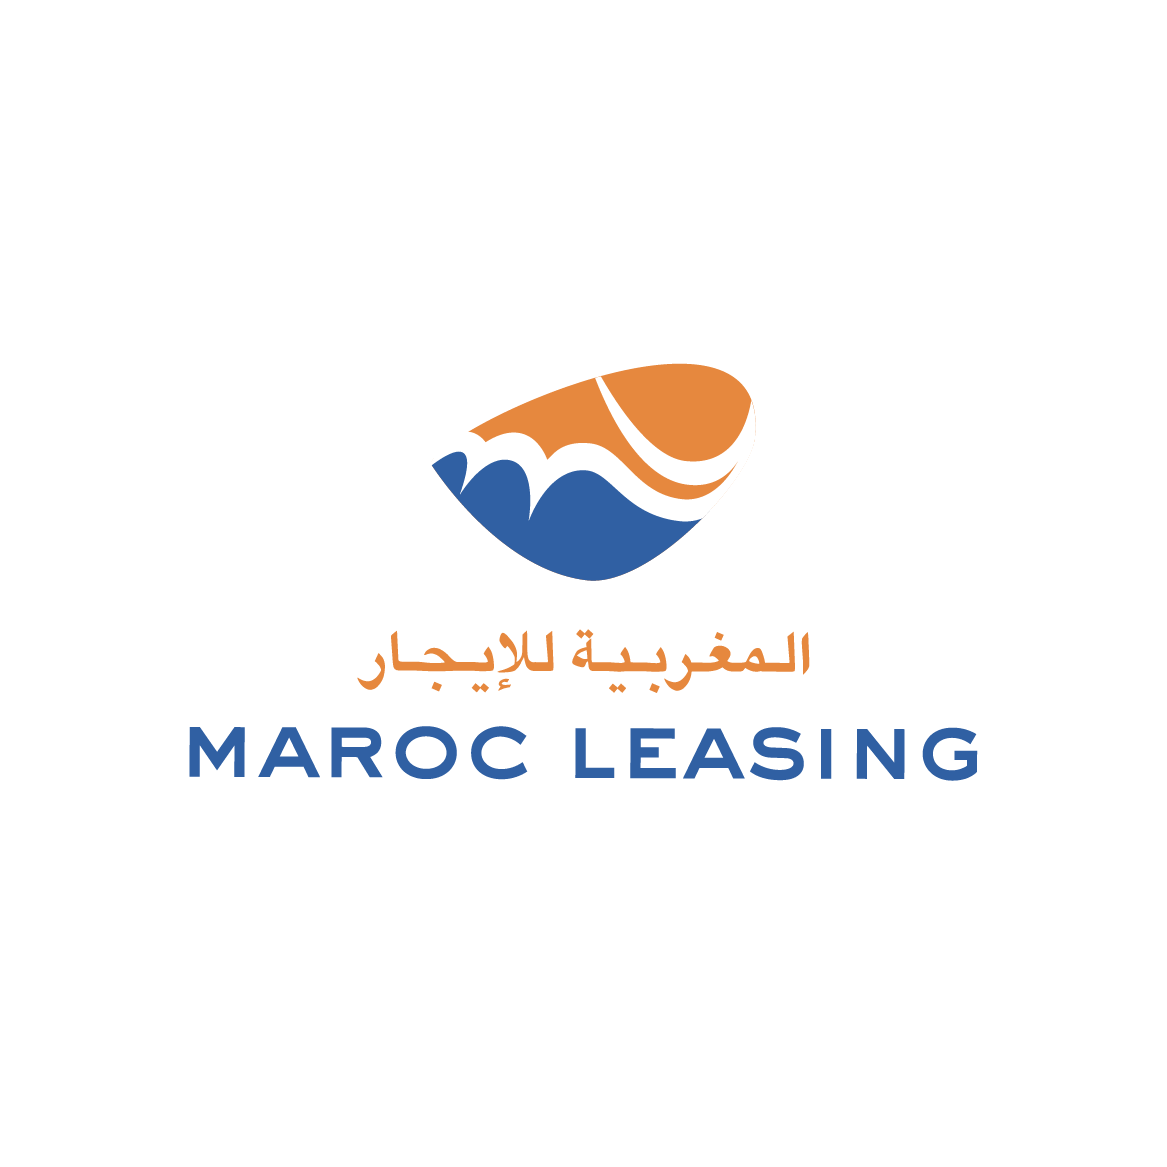 maroc leasing